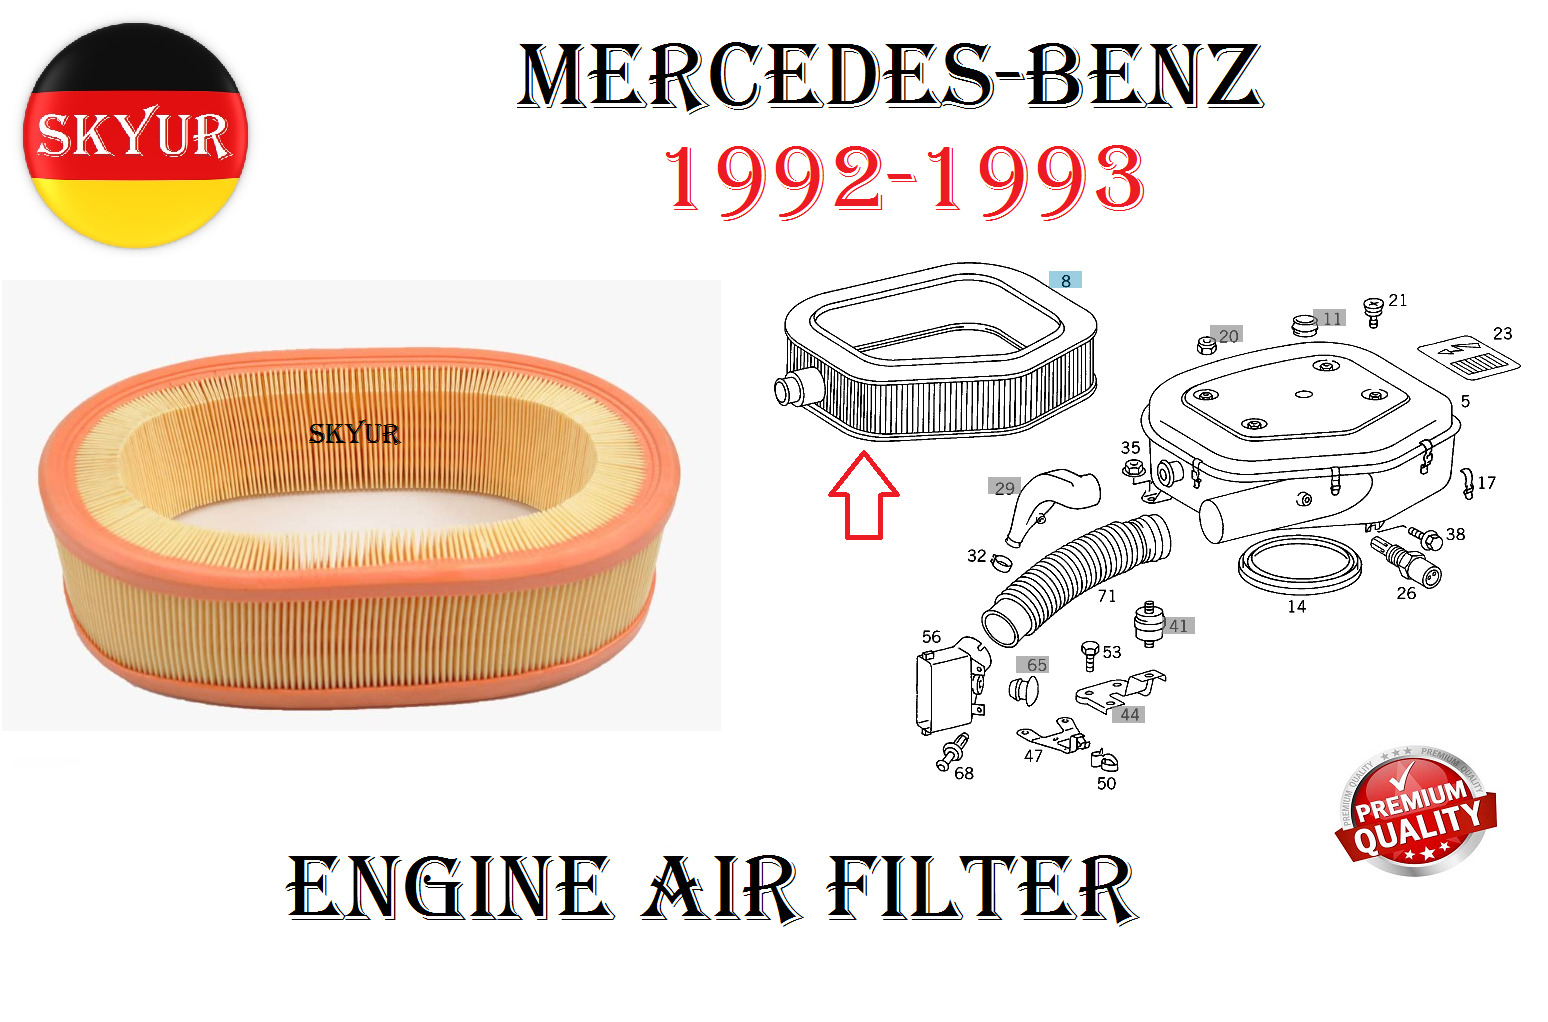 Engine Air Filter For 1992-1993 Mercedes-Benz 300SE Premium Quality